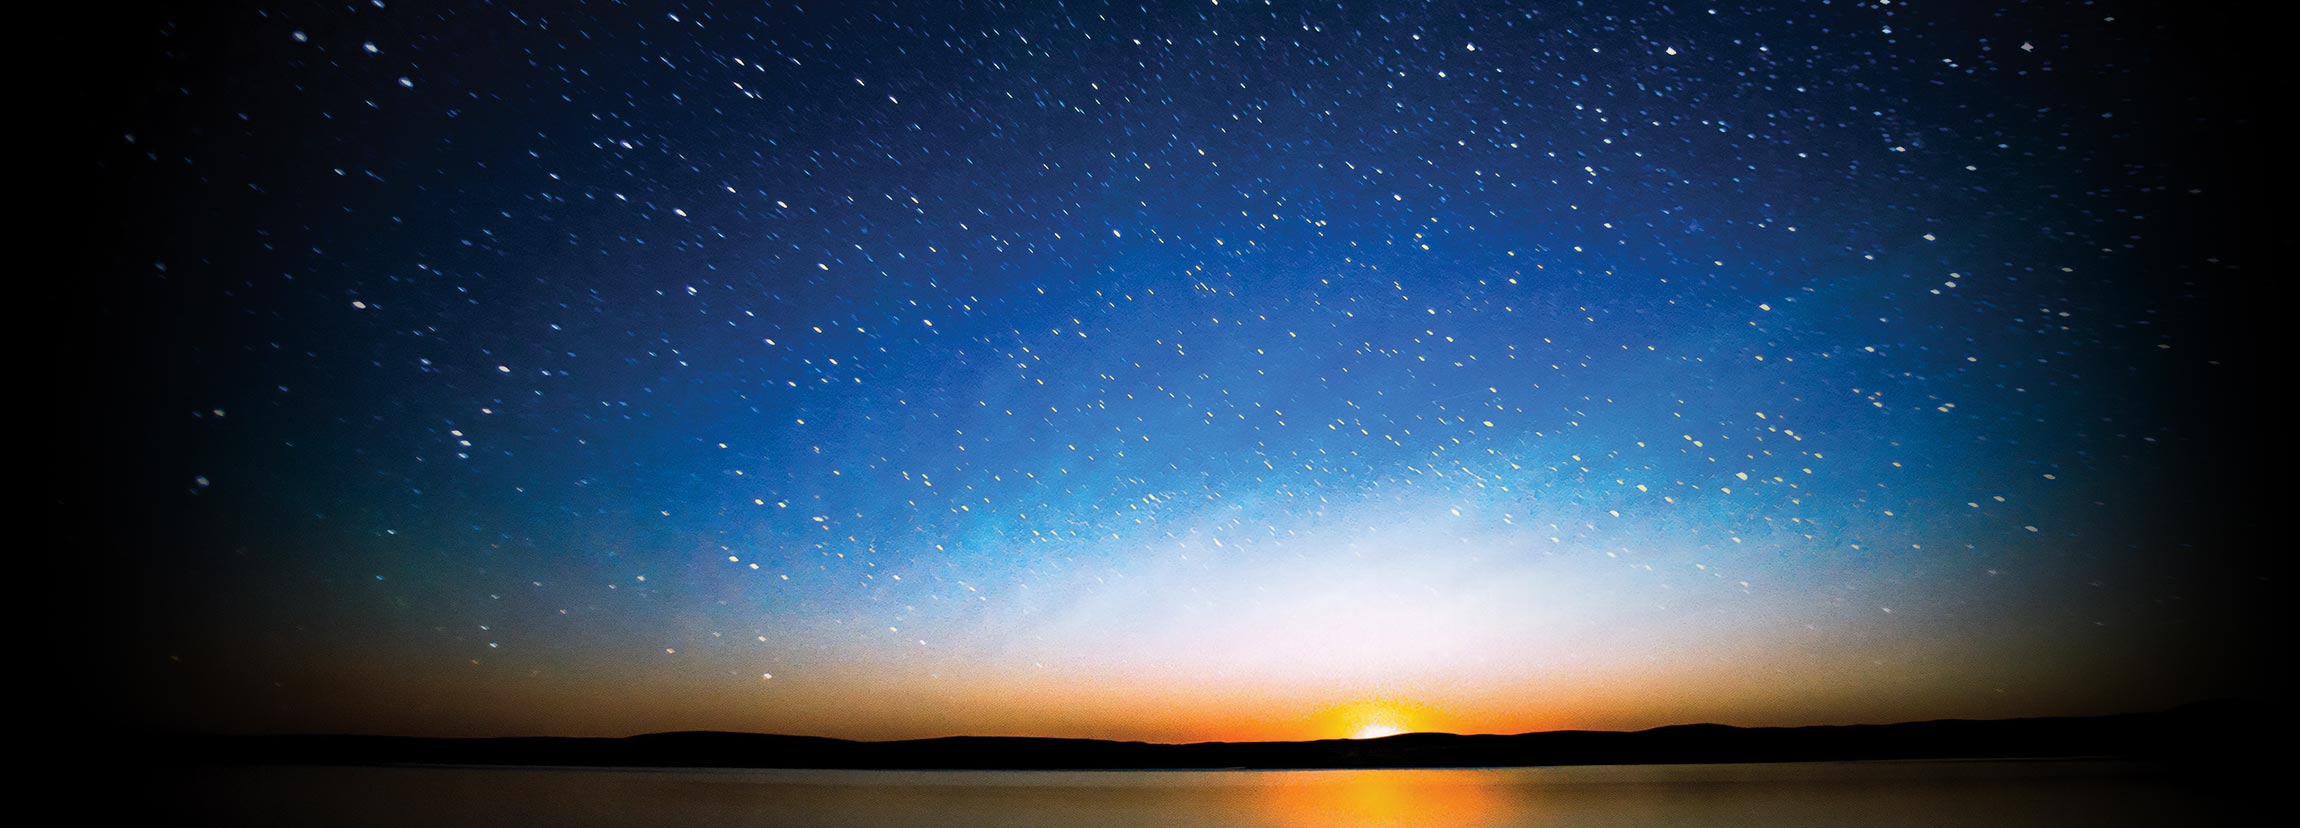 Panorama of sunset and stars